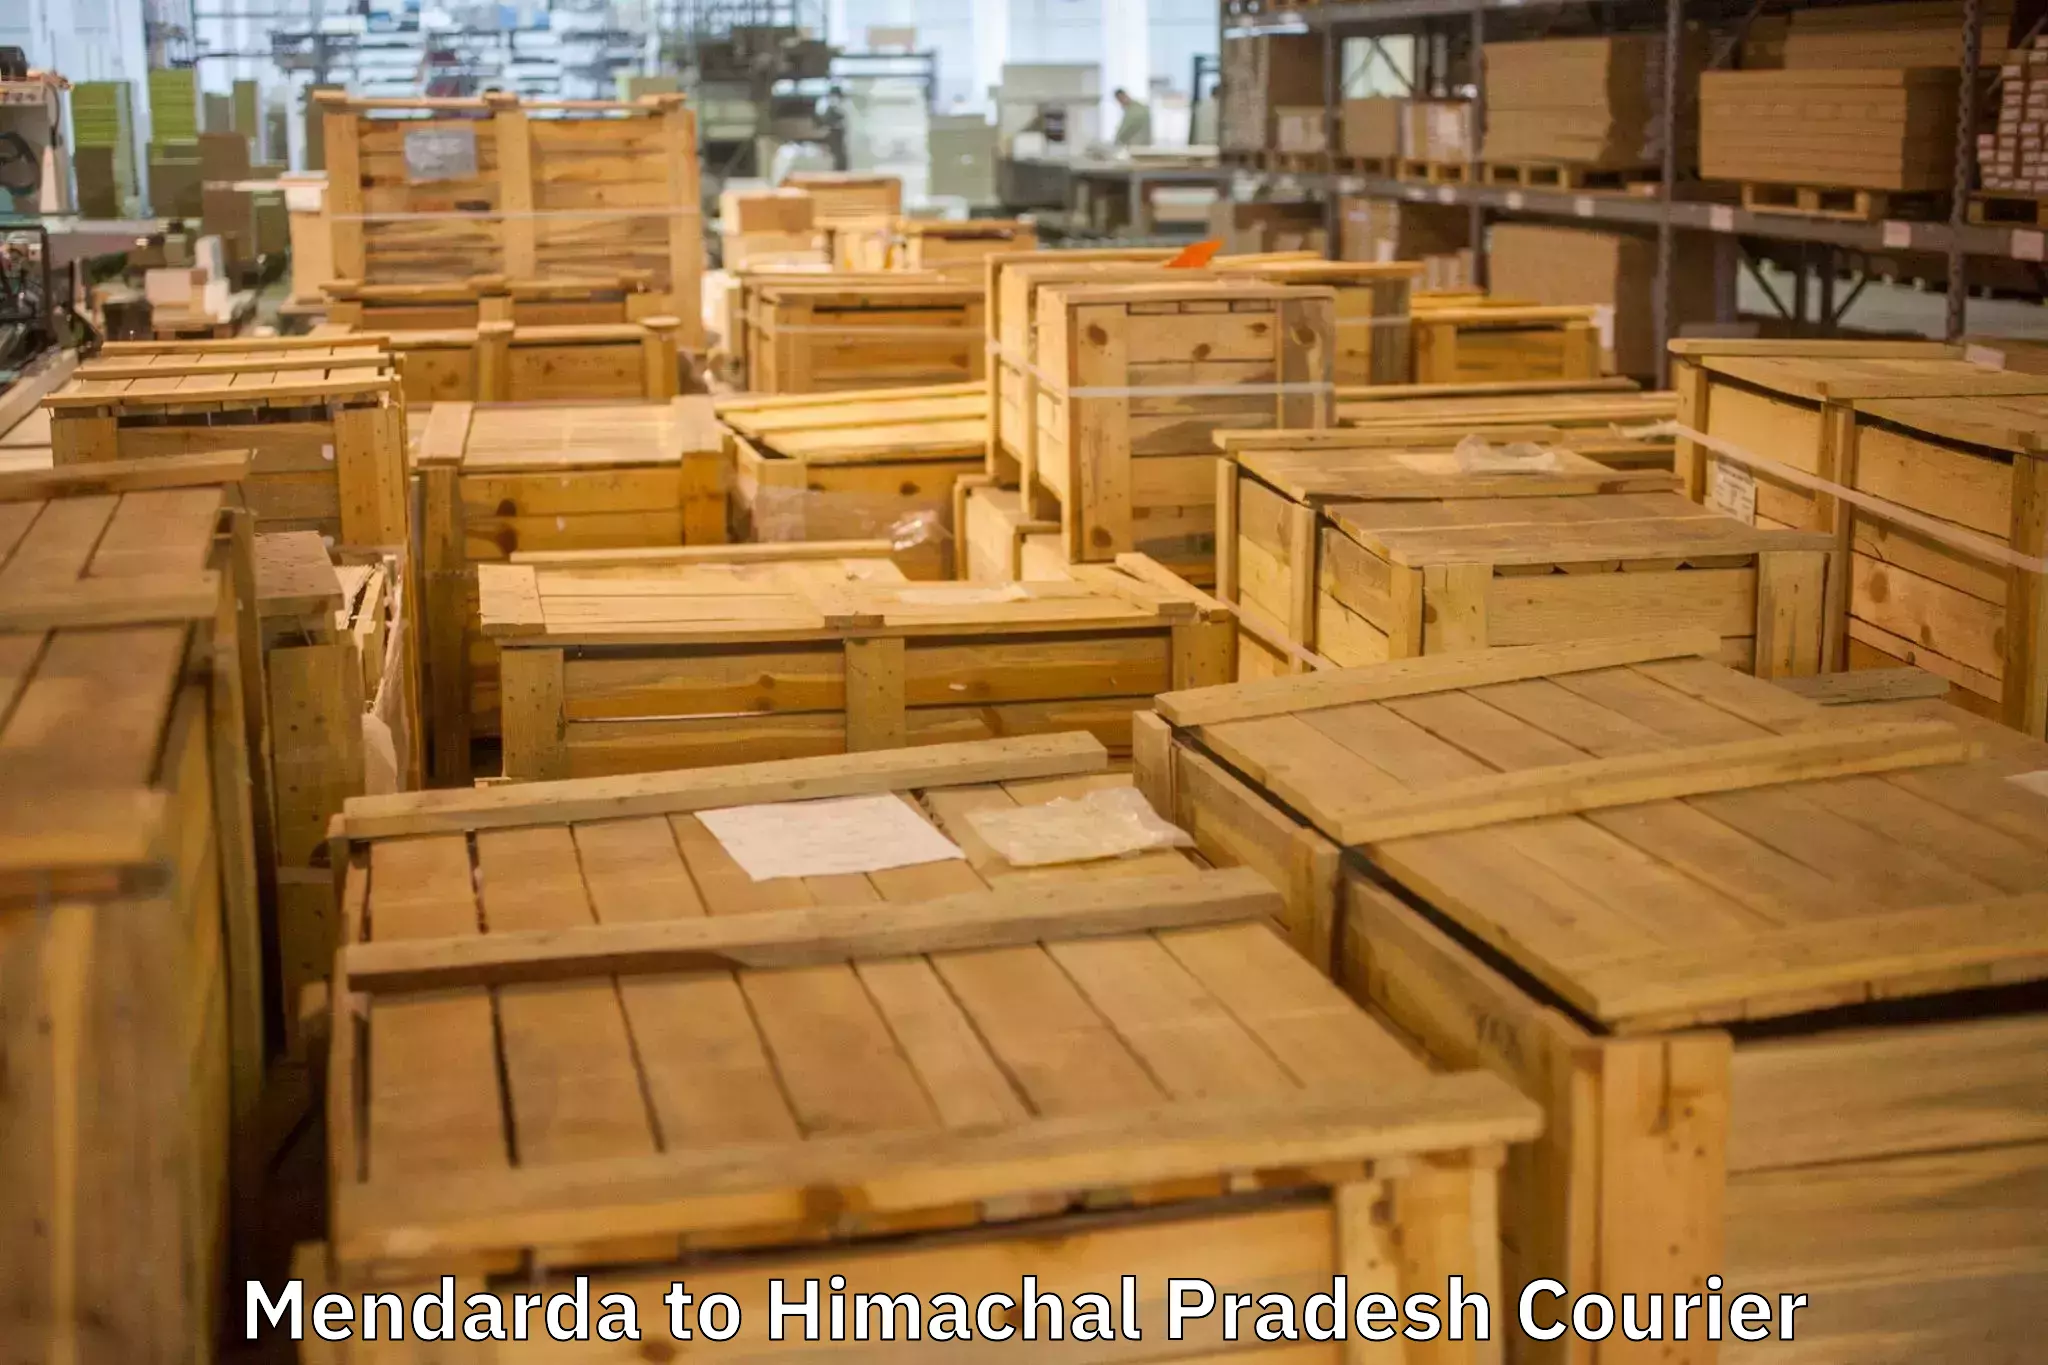 Professional moving company Mendarda to Jukhala